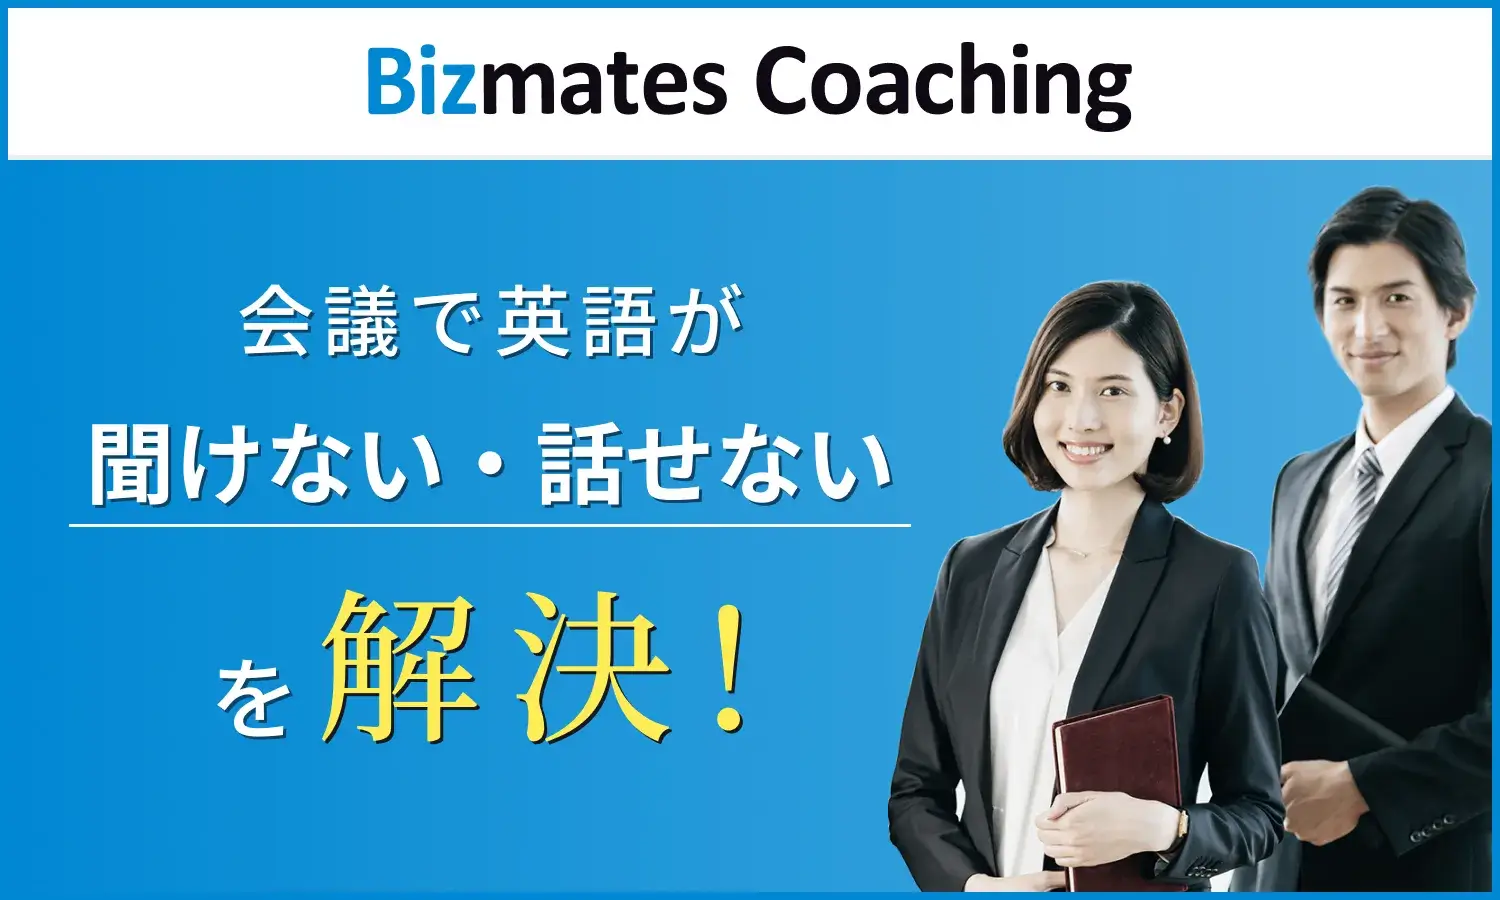 Bizmates Coaching banner